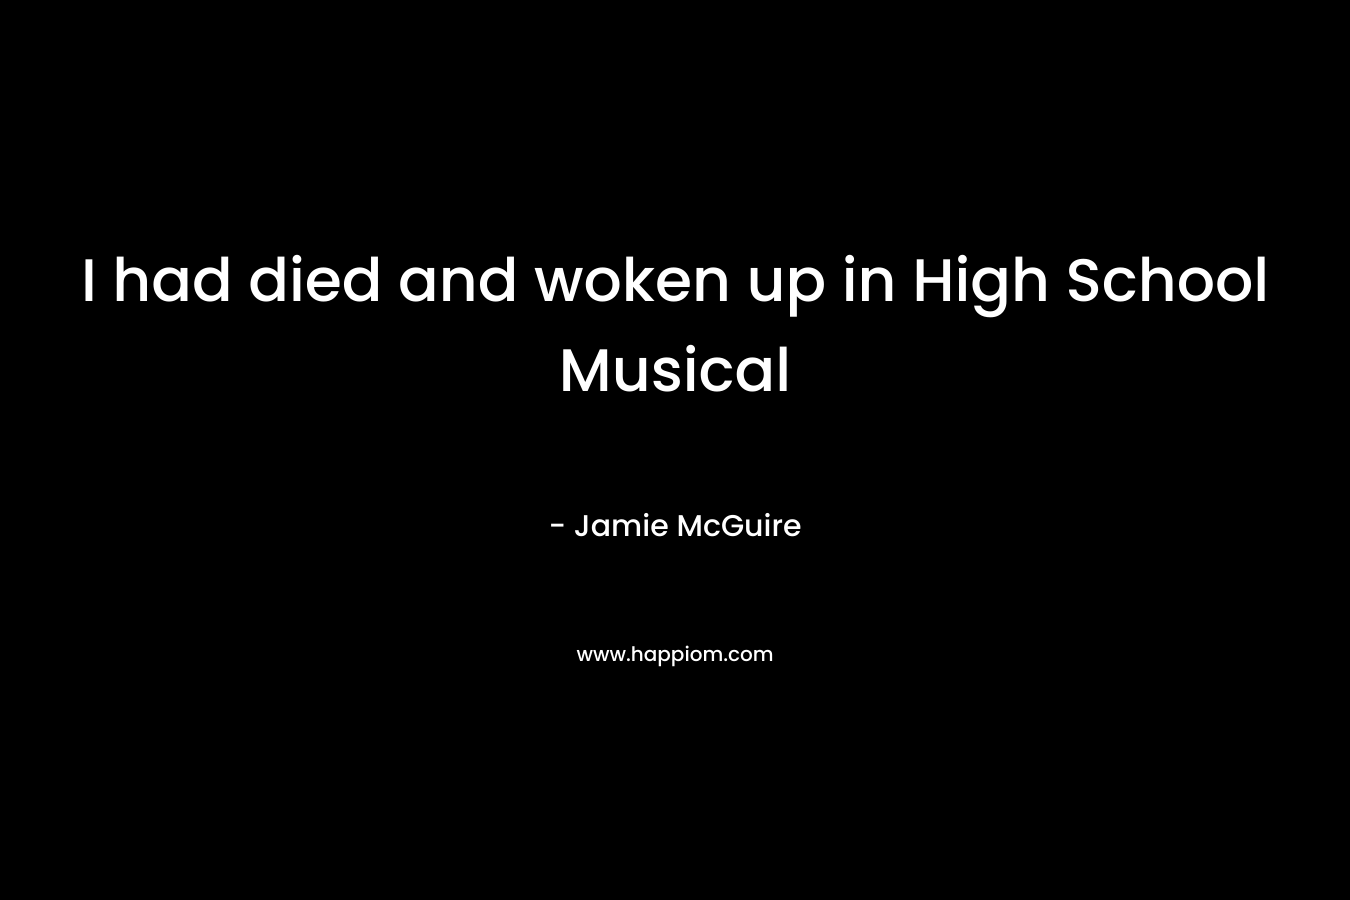 I had died and woken up in High School Musical – Jamie McGuire